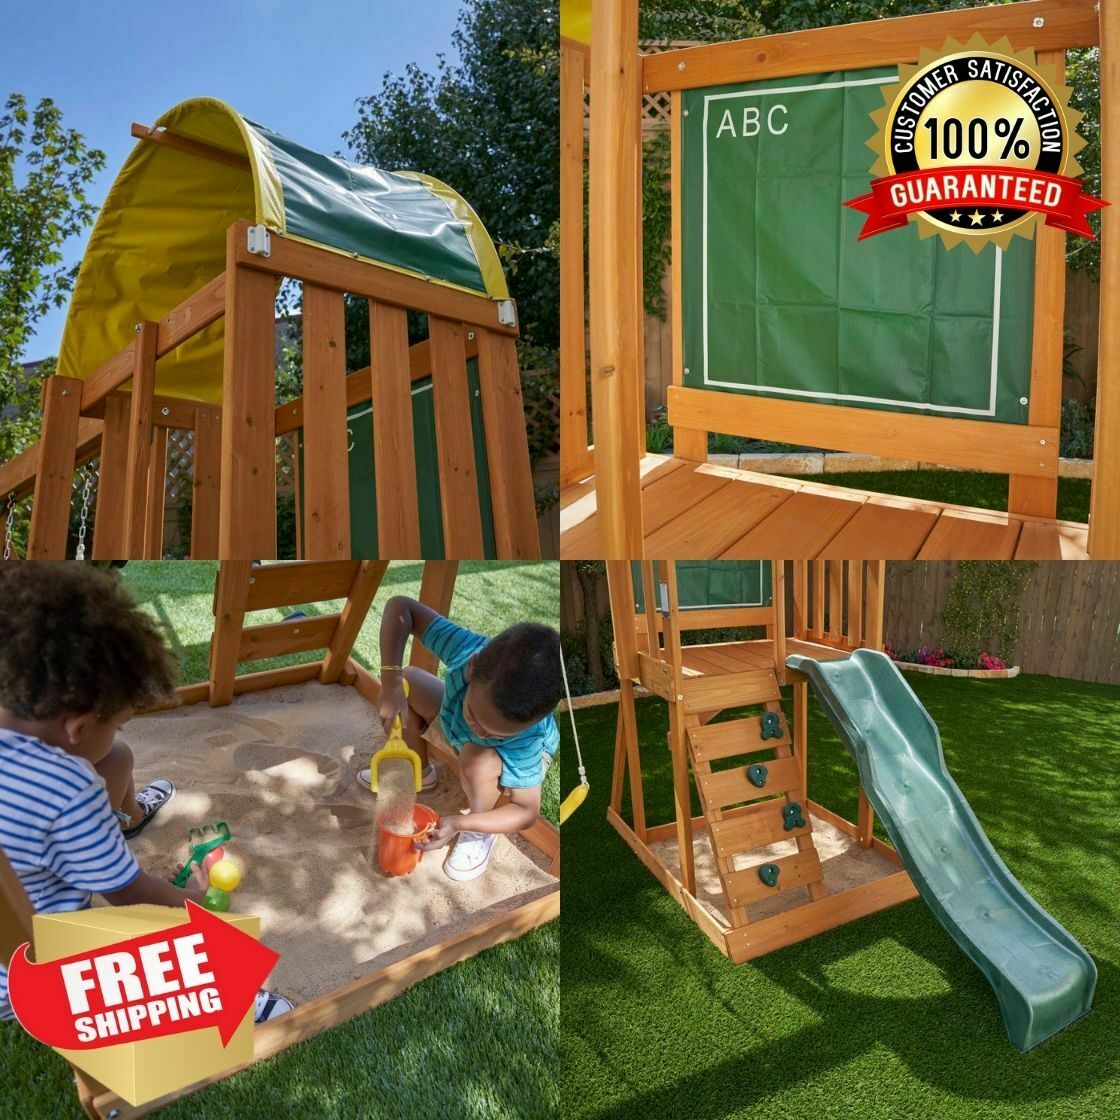 KidKraft Children's Wooden Swing Set - Kid's  Swing Set with Slide - Backyard Play with Sandbox